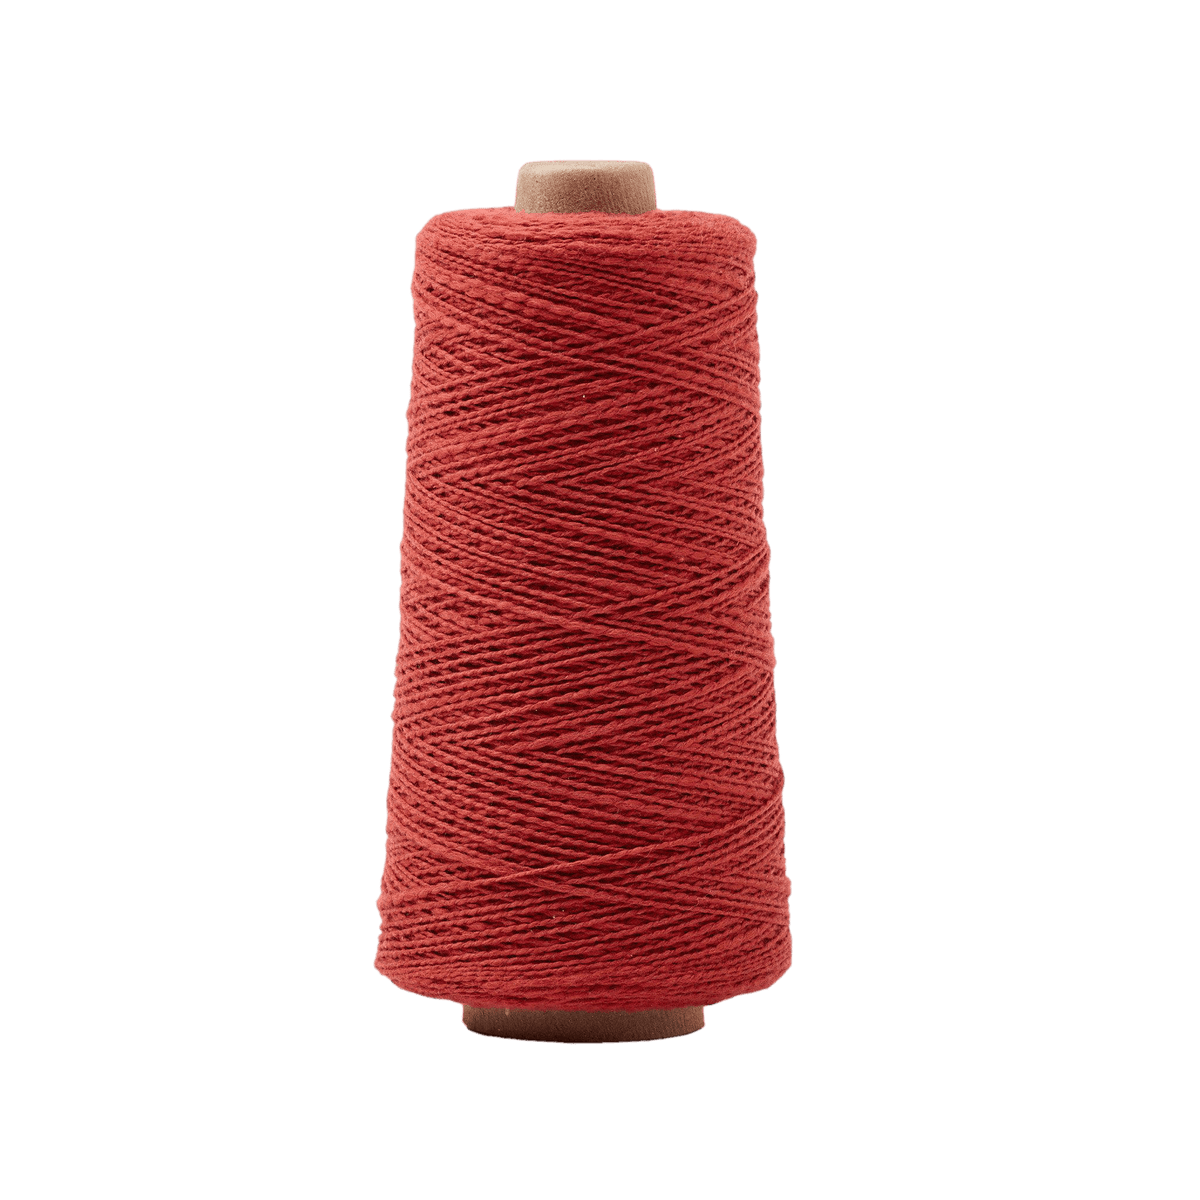 GIST Yarn Mallo Cotton Slub Weaving Yarn Brick